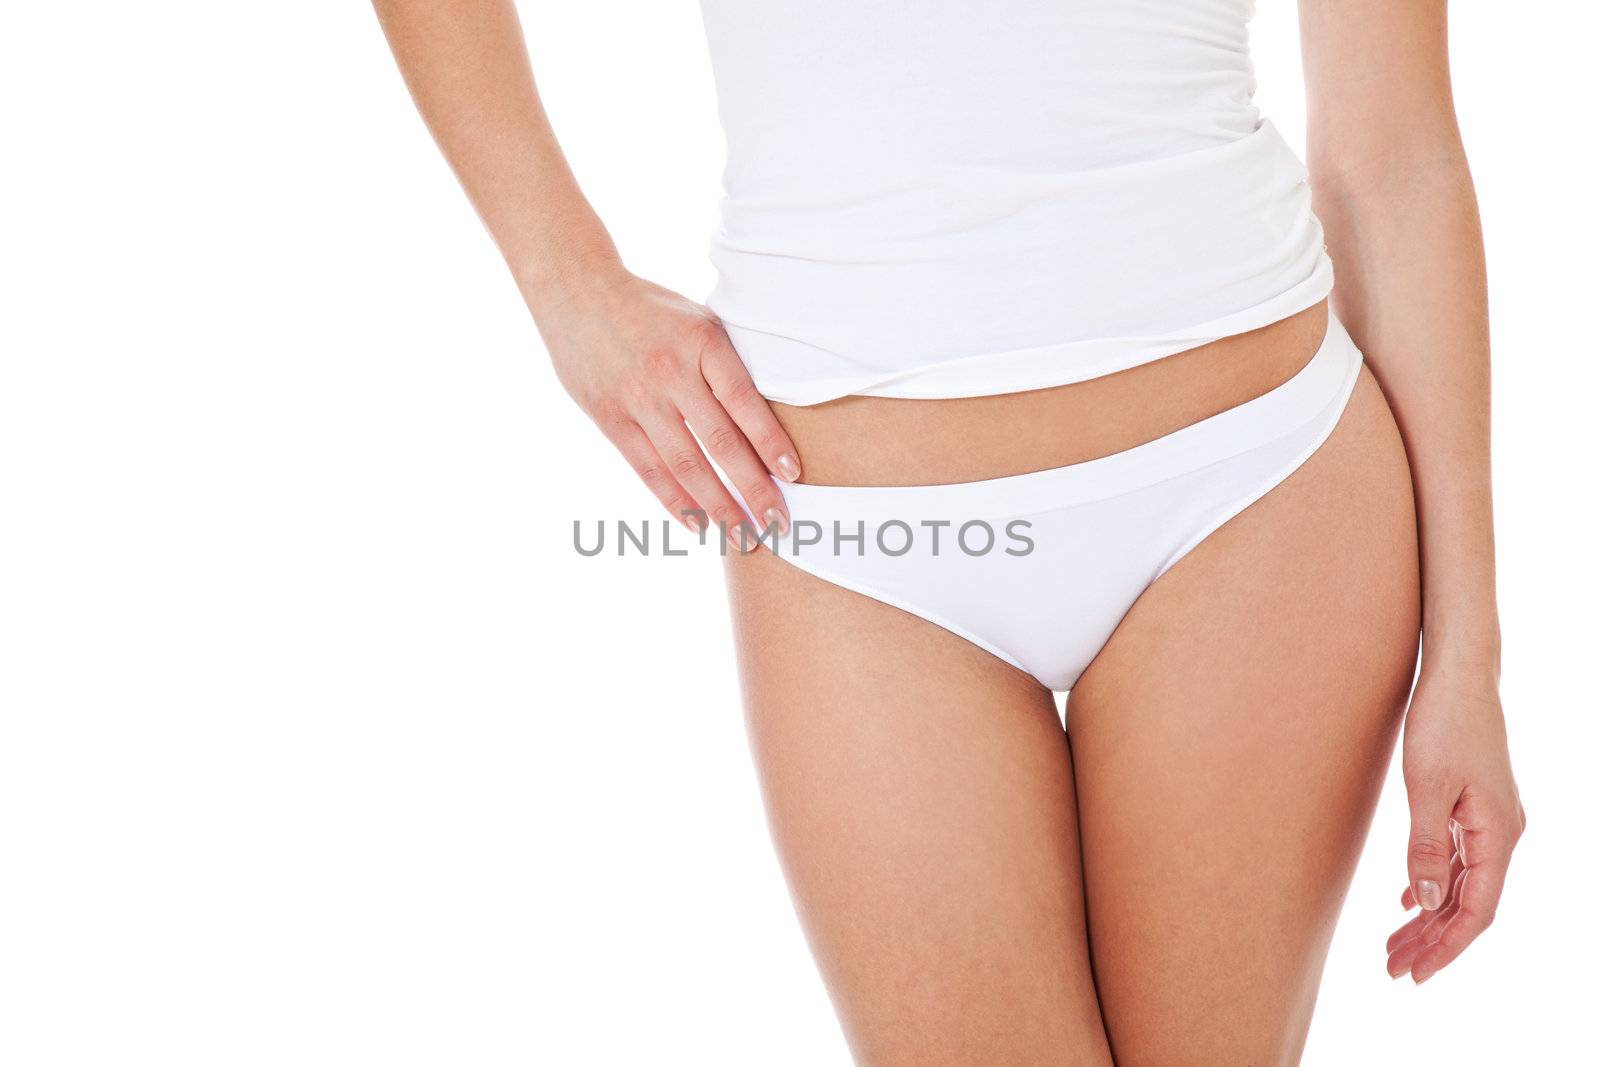 Attractive female person in white underwear. All on white background.